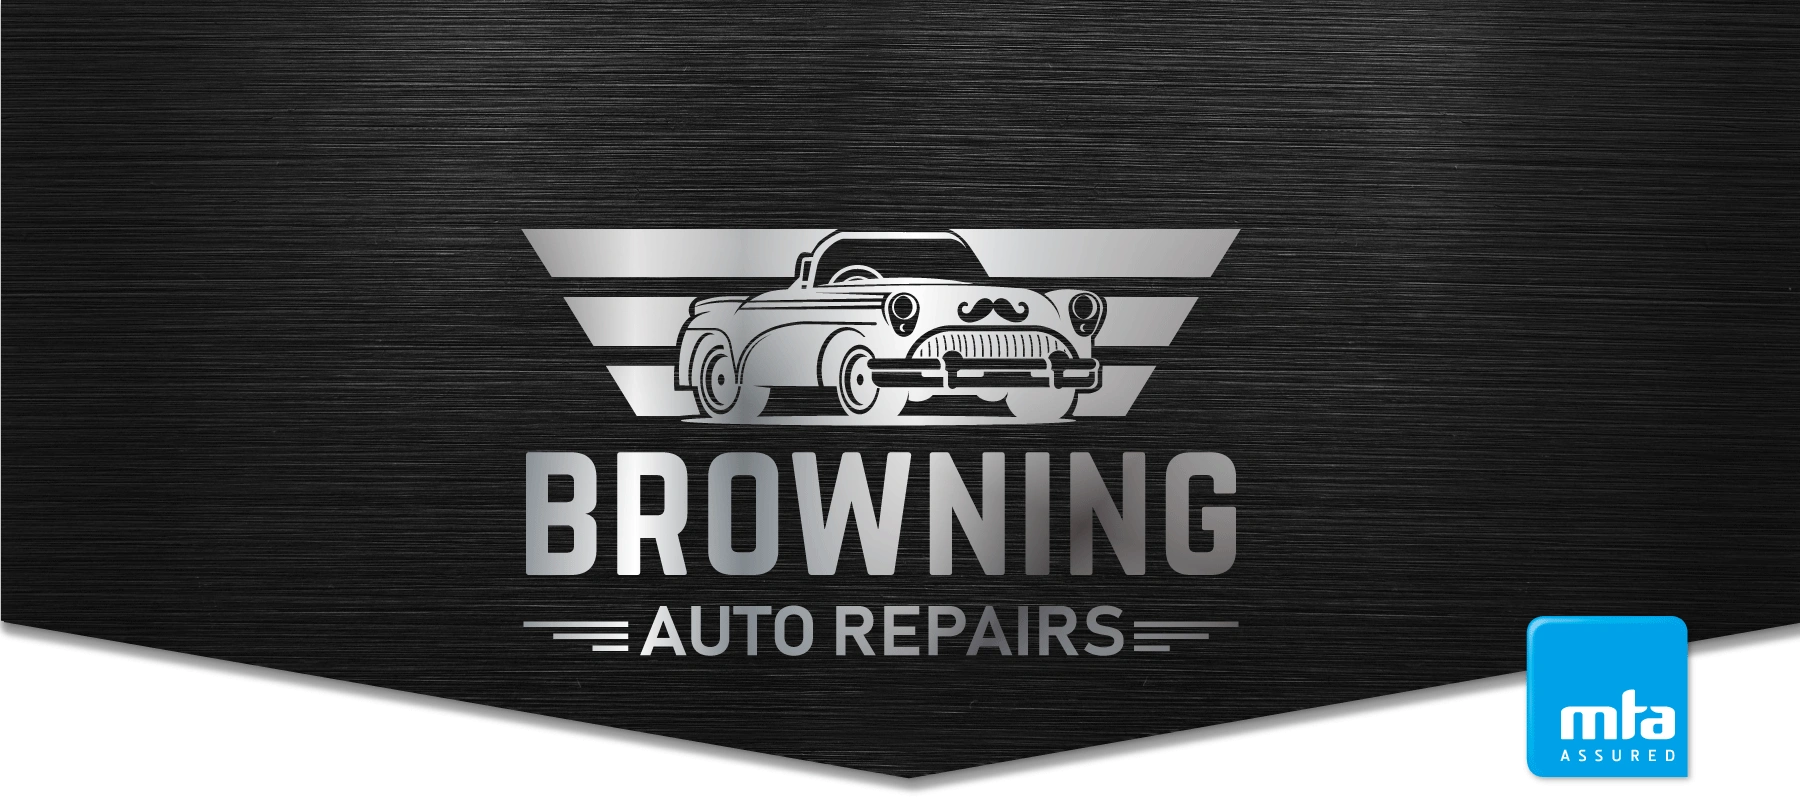 Browning Auto Repairs
mta assured mechanics
mta approved car service
car service
vehicle repair
